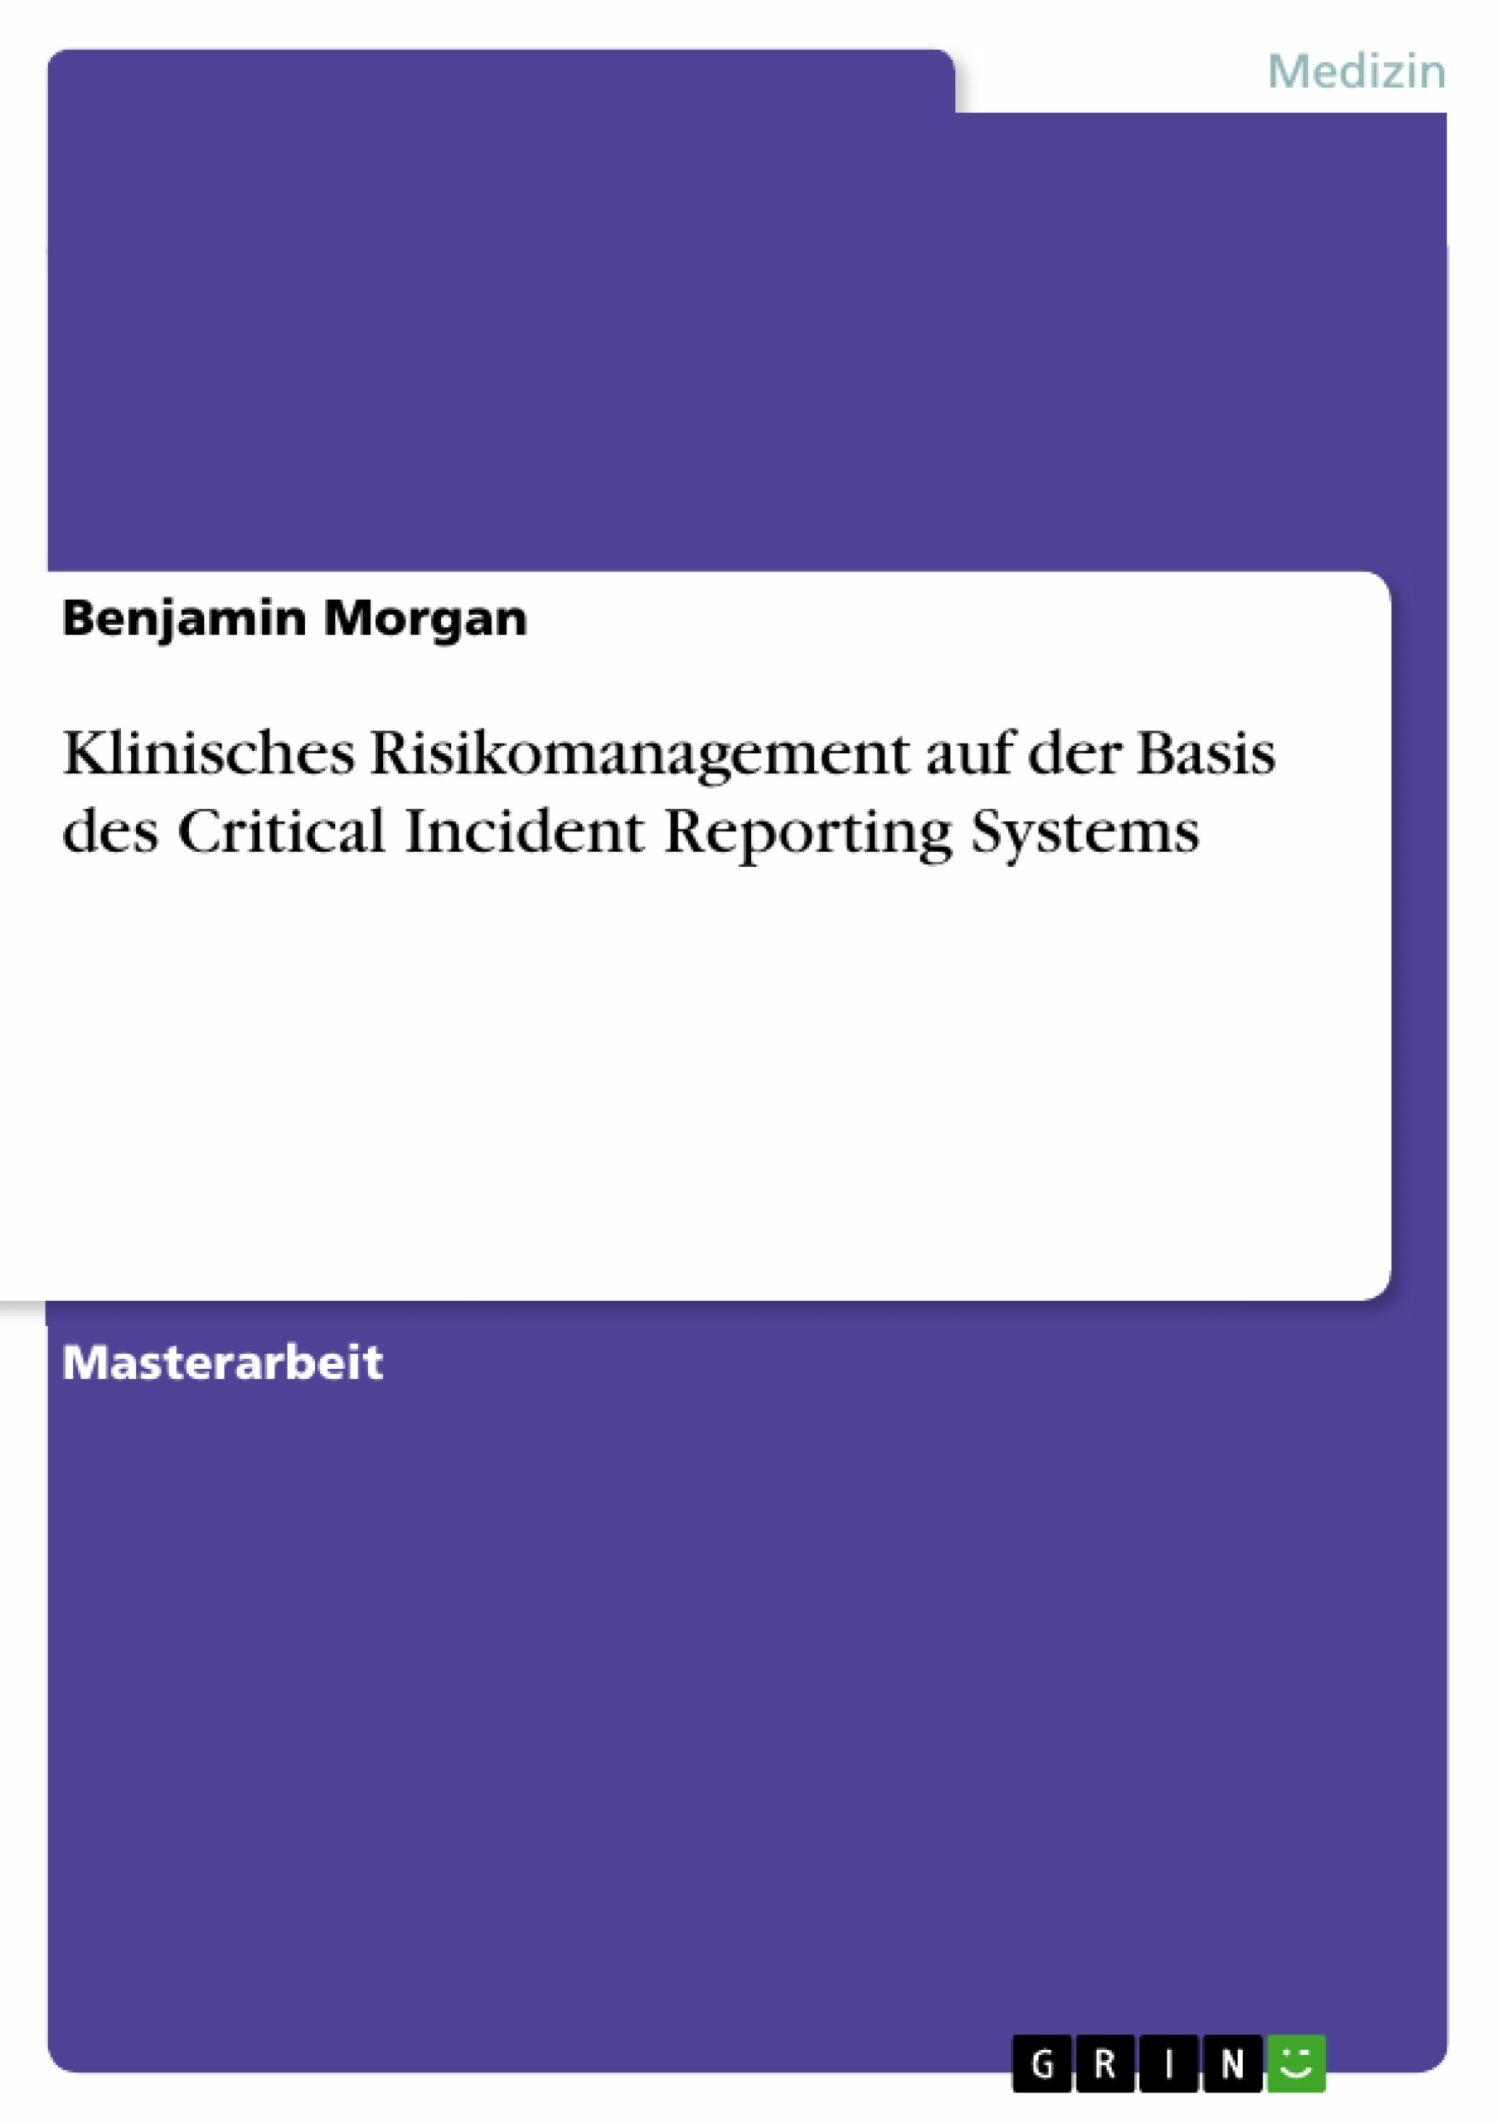 Klinisches Risikomanagement auf der Basis des Critical Incident Reporting Systems